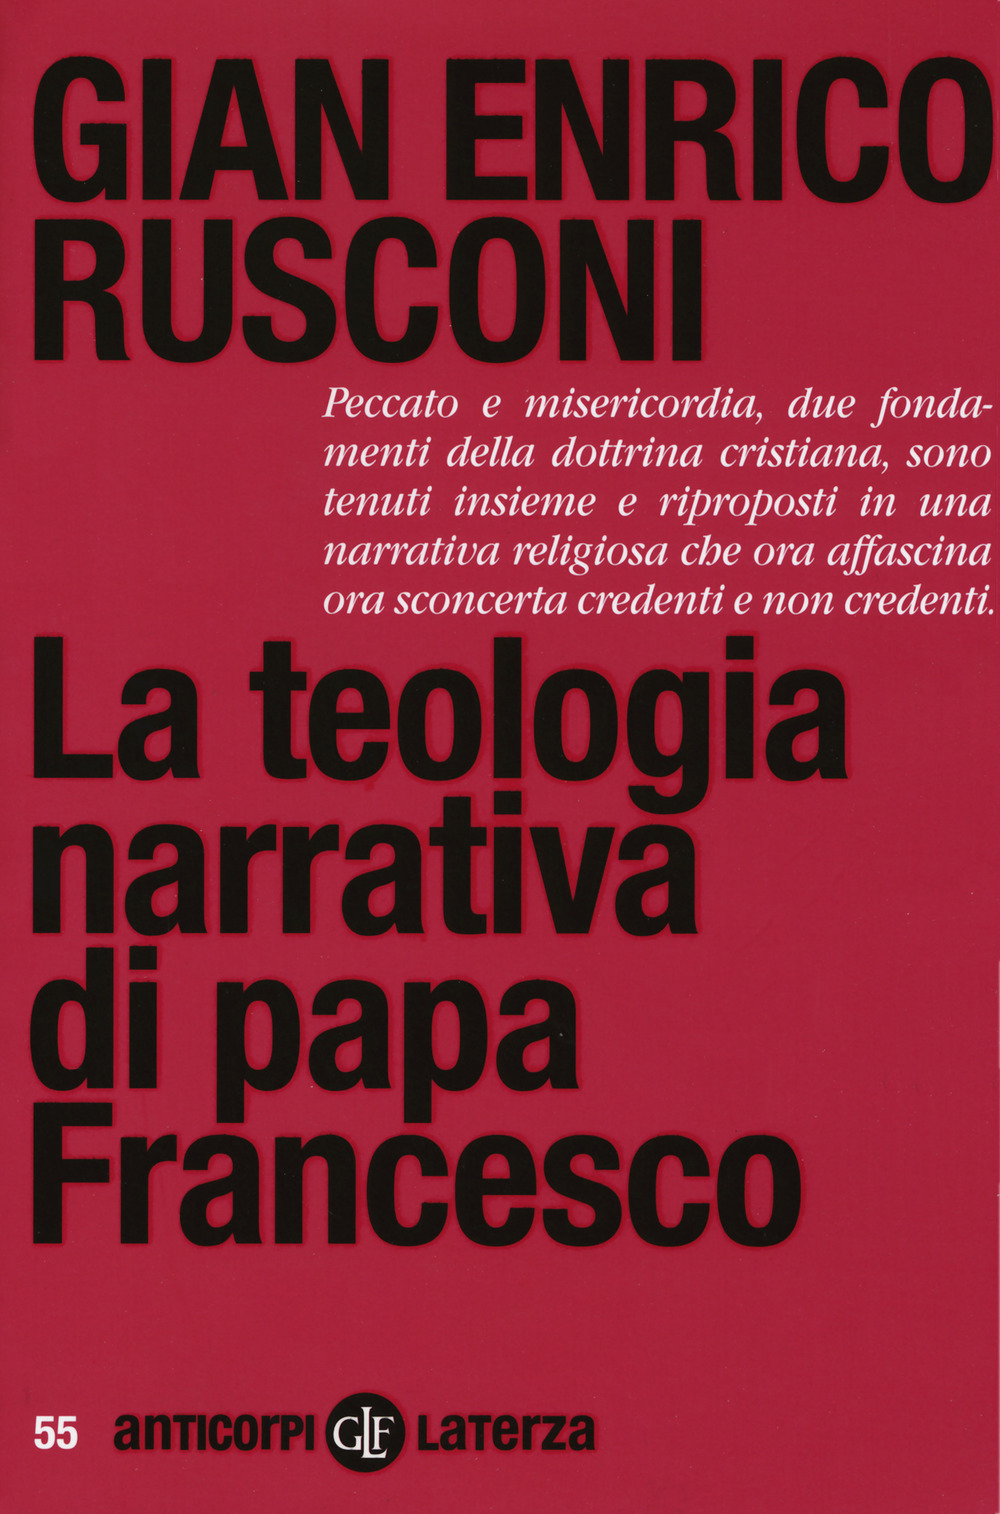 Image of La teologia narrativa di papa Francesco